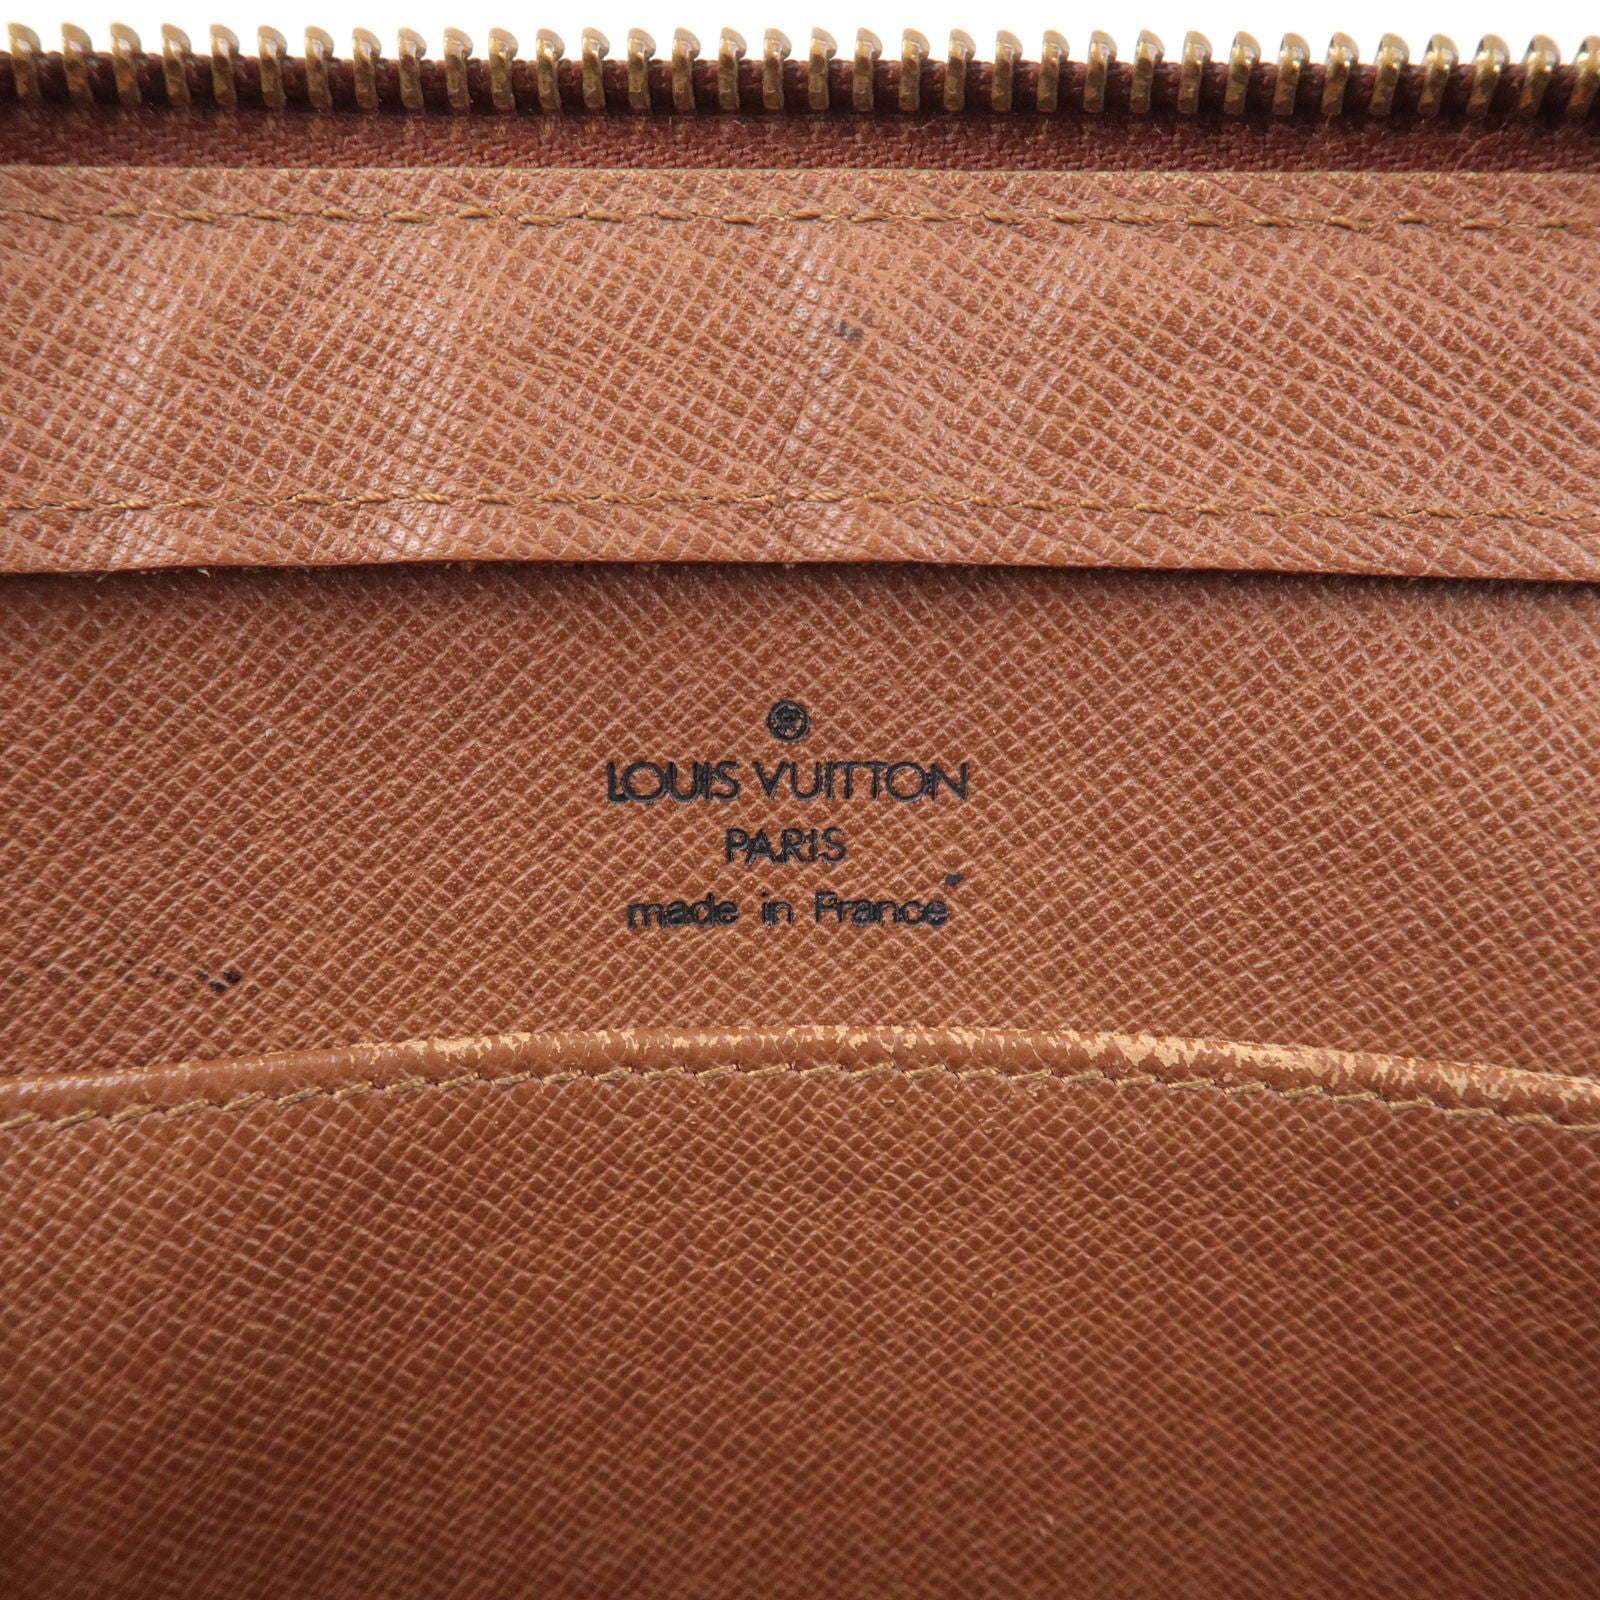 Louis-Vuitton-Monogram-Orsay-Clutch-Bag-Pouch-Brown-M51790 – dct-ep_vintage  luxury Store